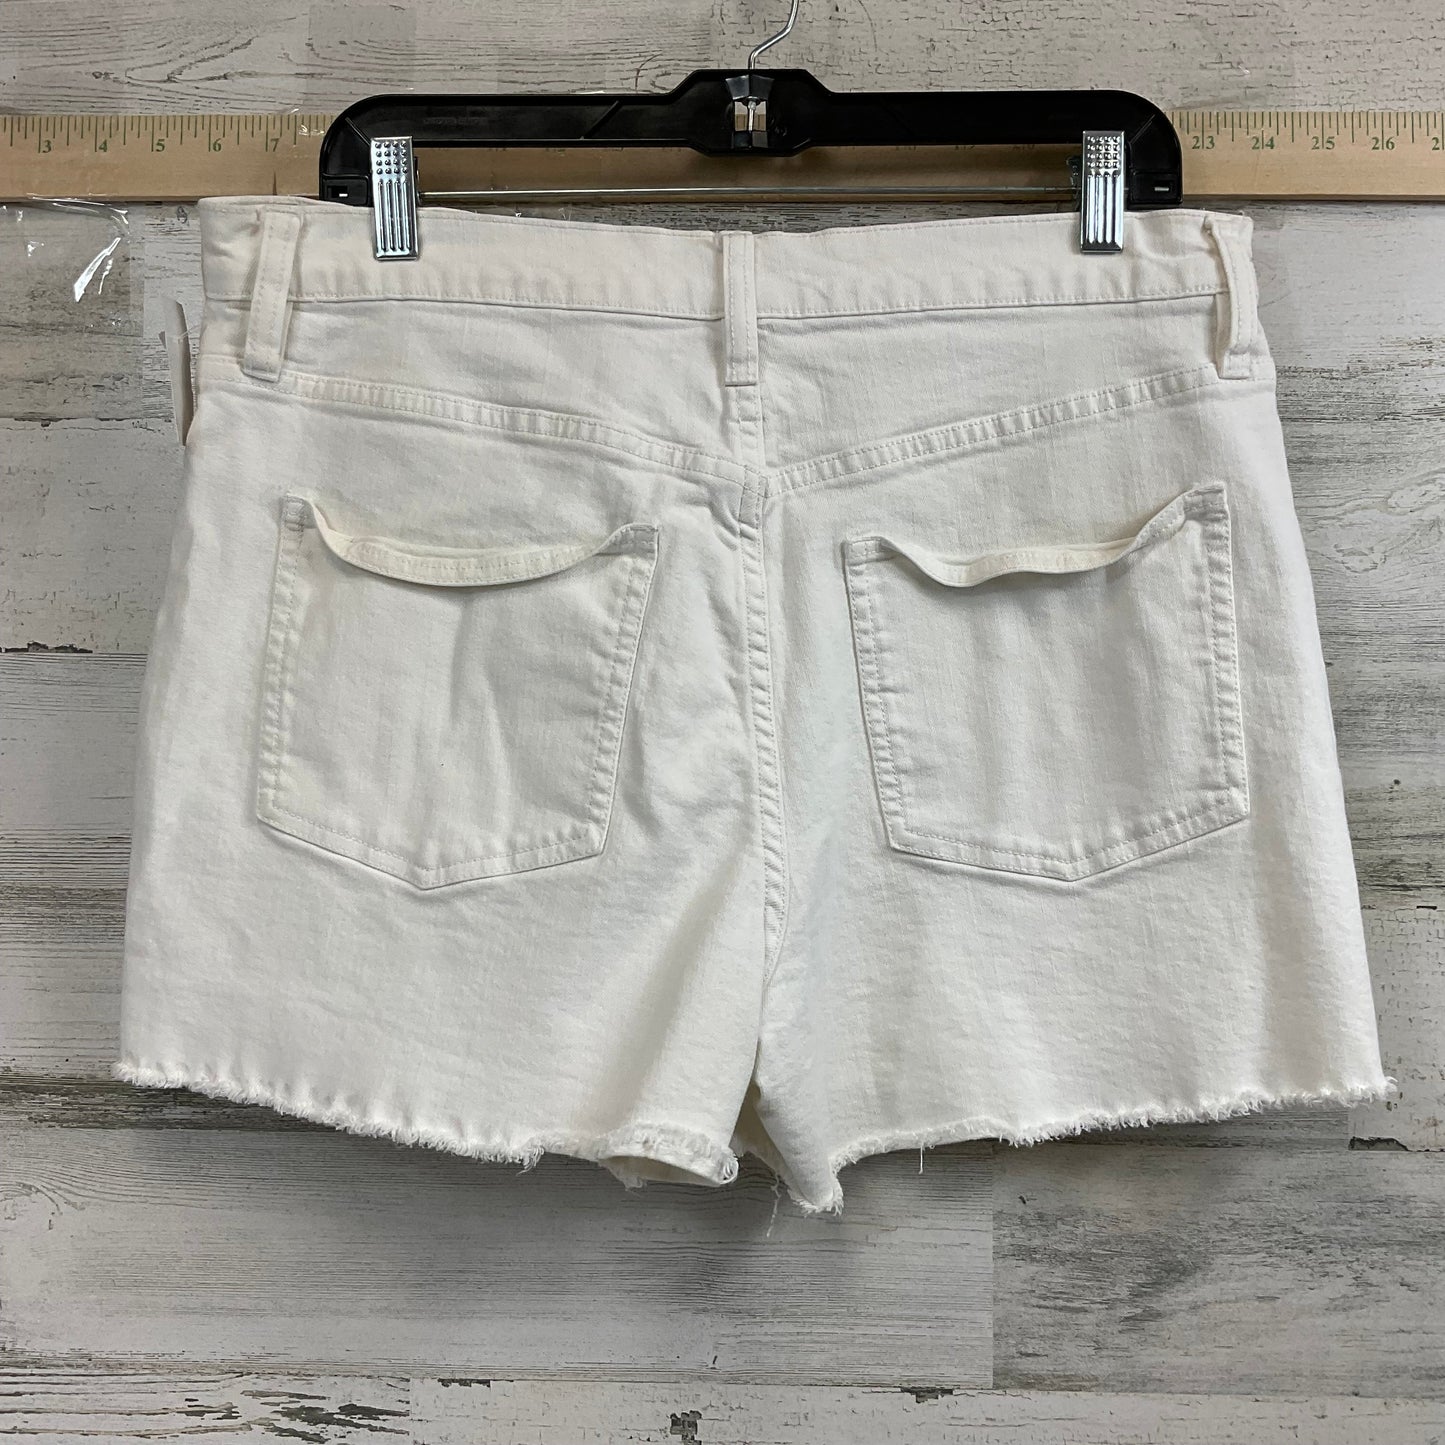 White Shorts J. Crew, Size 14